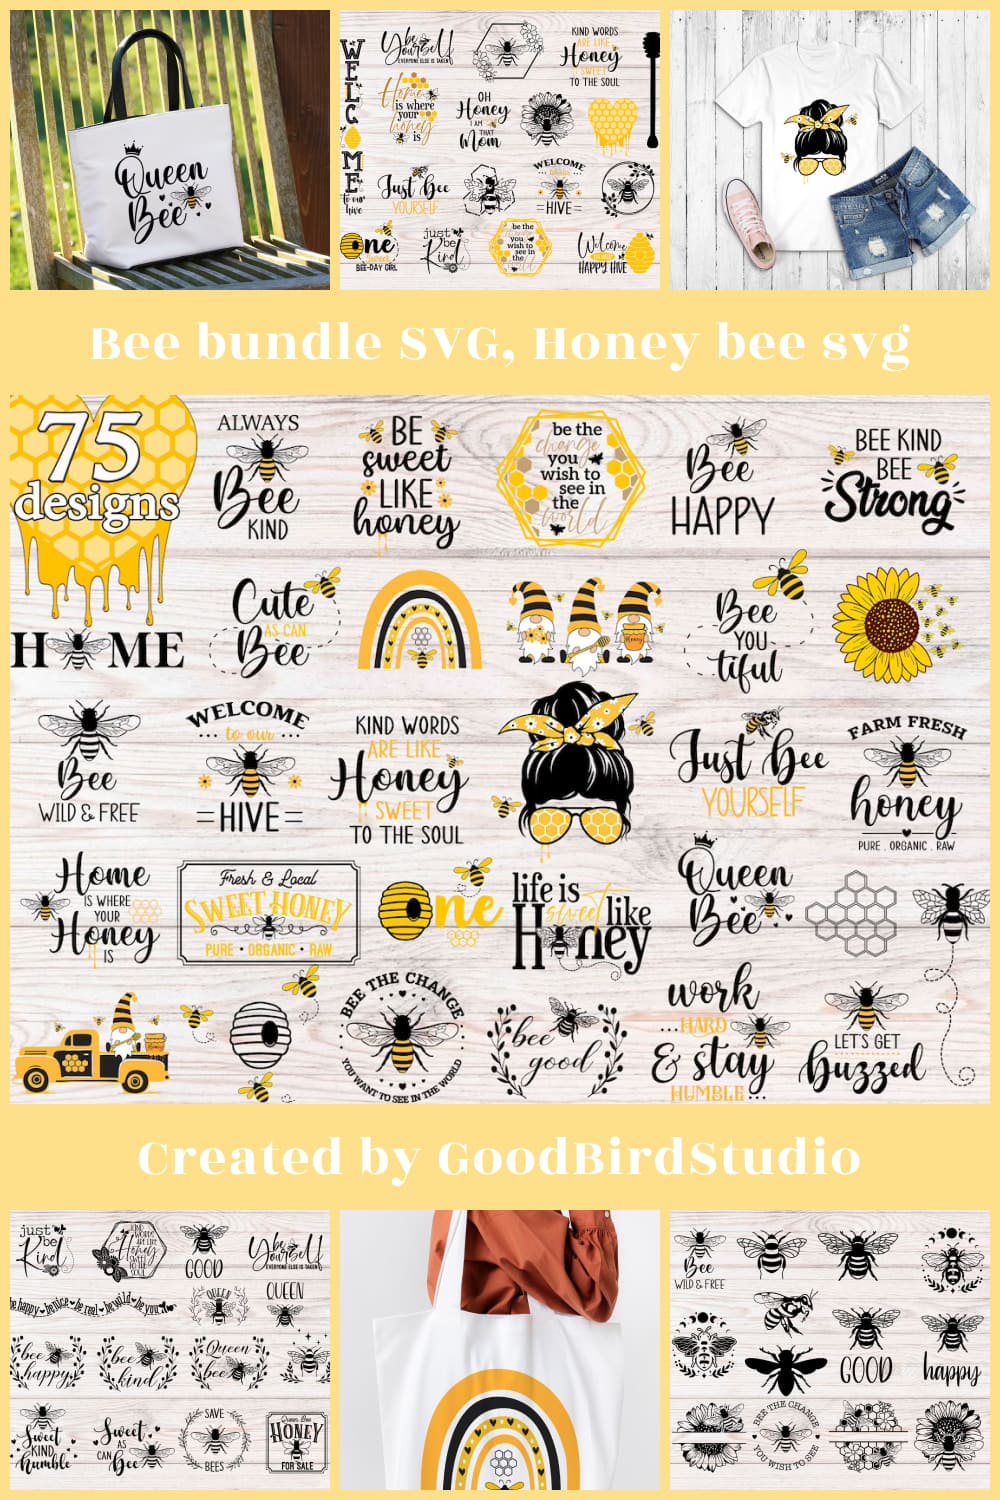 01 bee bundle svg honey bee svg pinterest